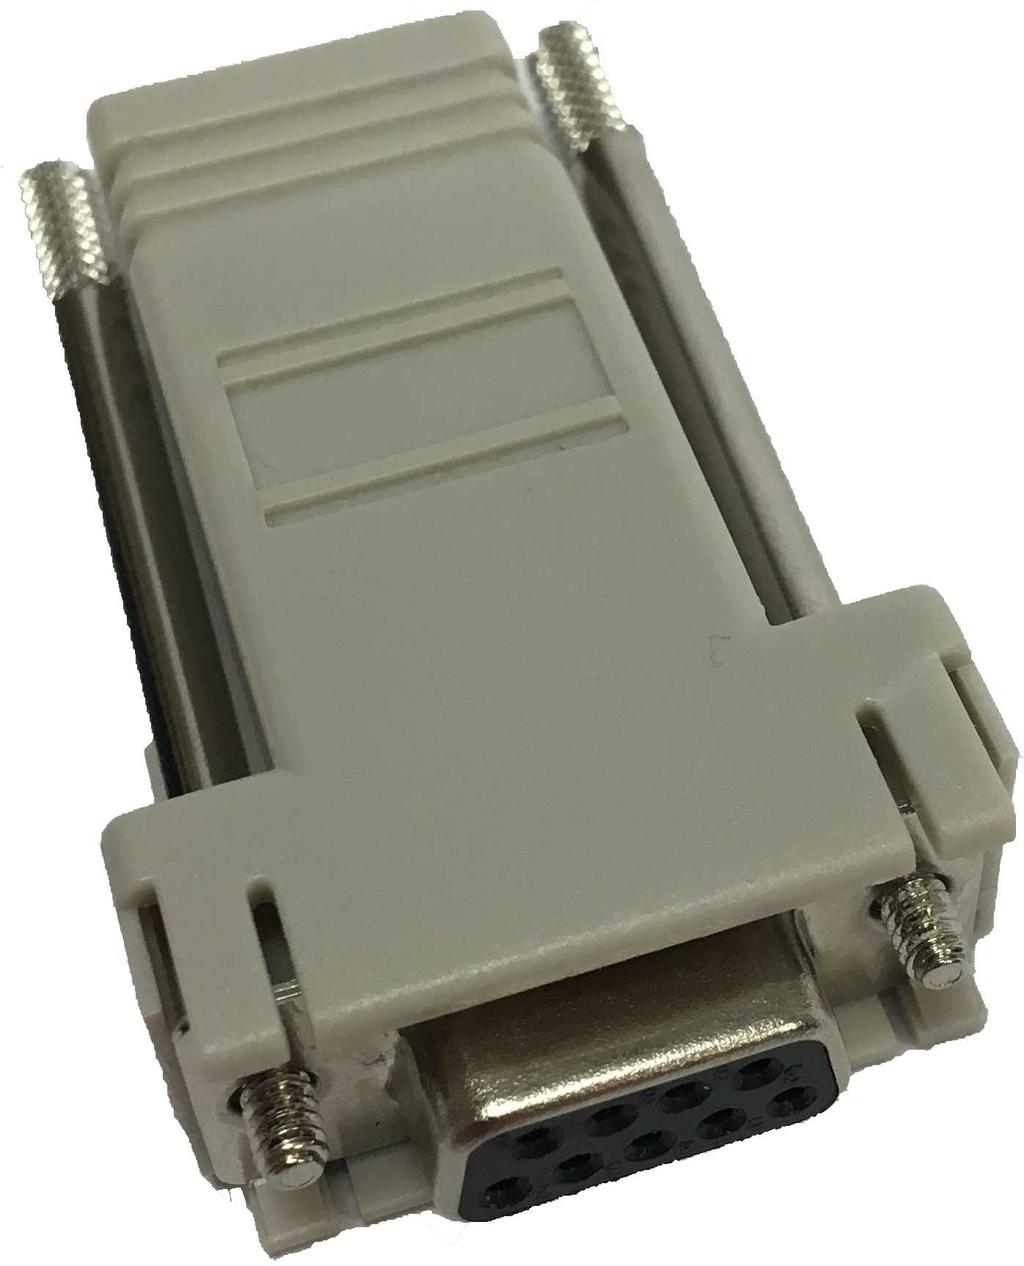 4 x1 CANBUS Termination Adapter (G1 only) D-PR-1057-10A-00 x4 Standard Rack Screws 1-000-12500-06 x4 Pads